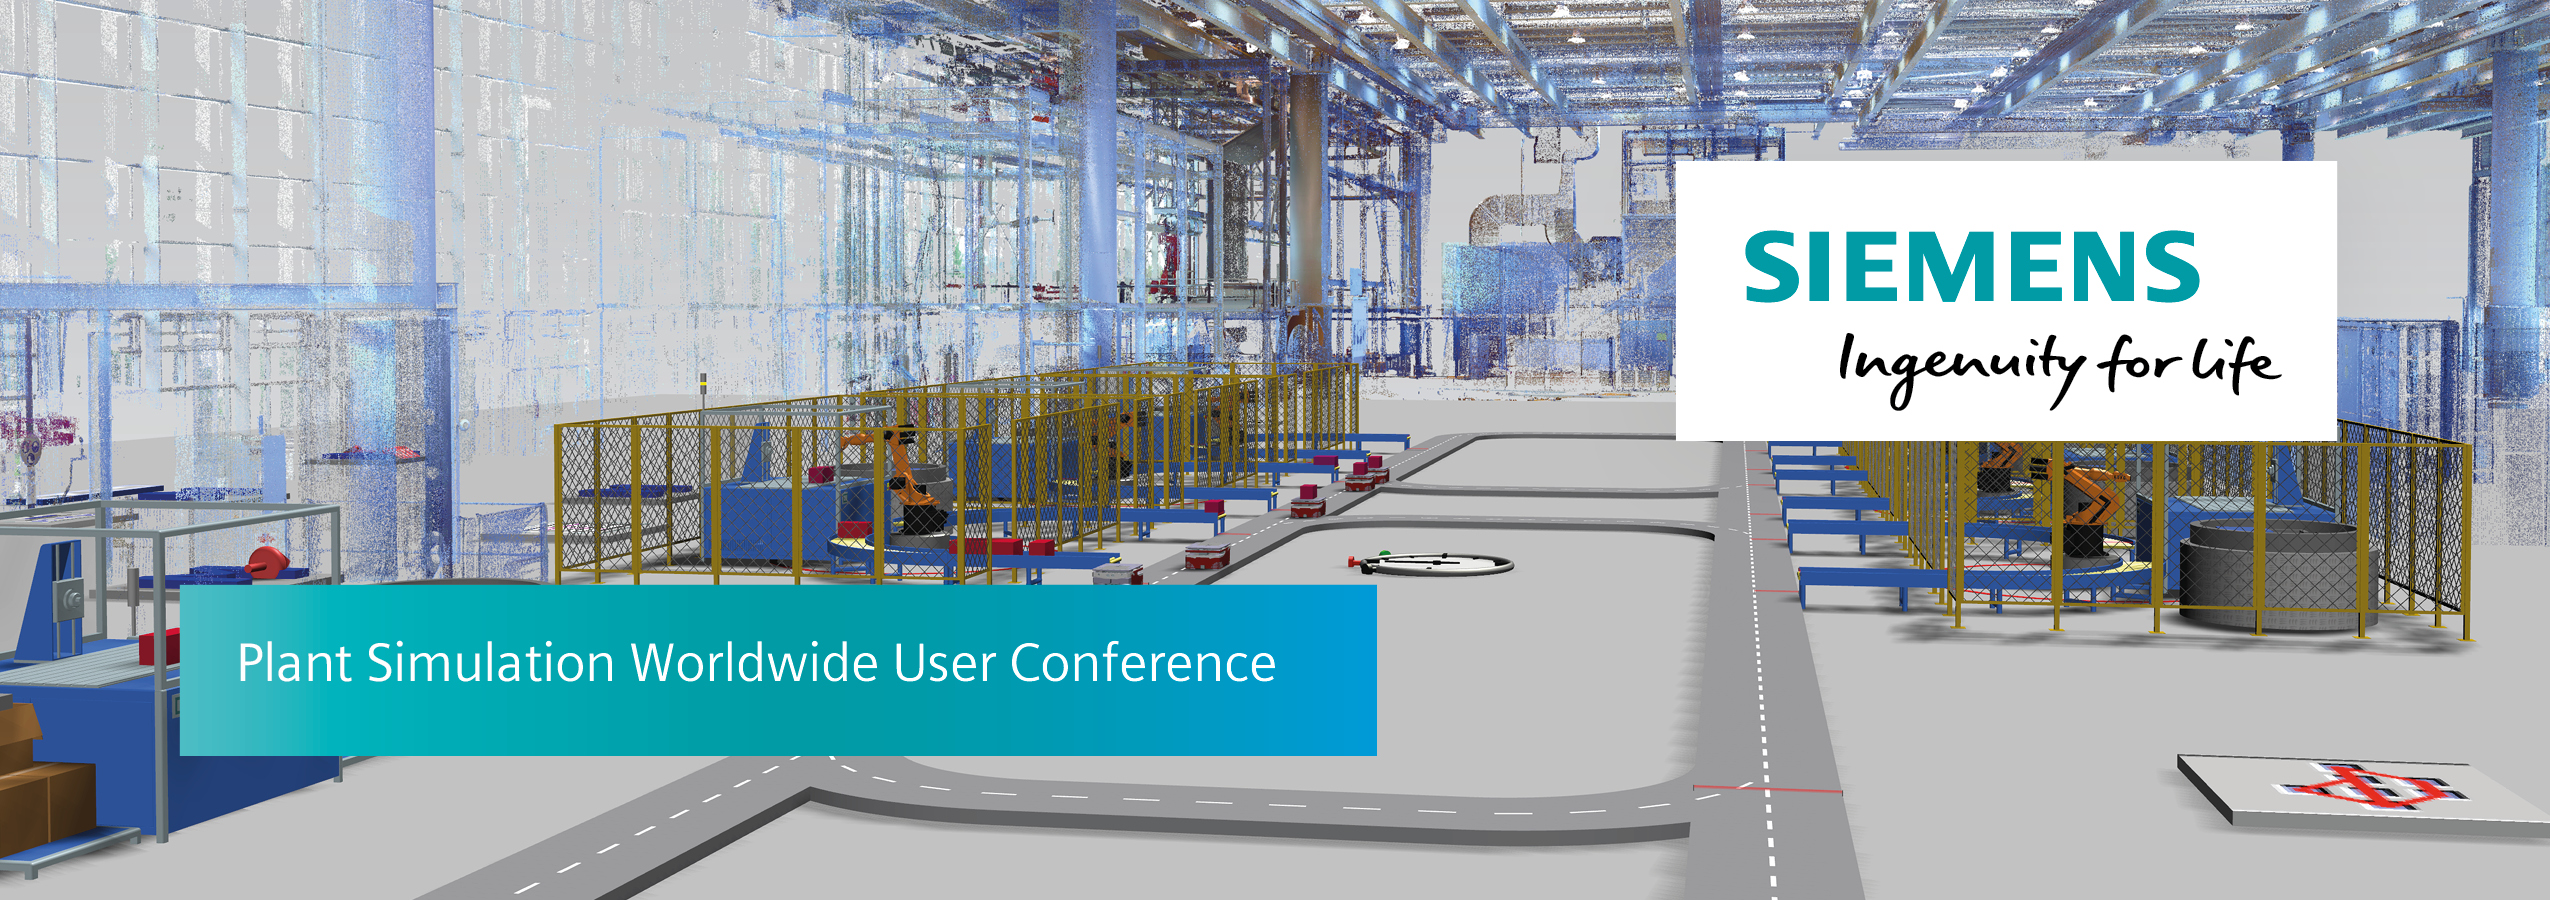 Siemens-PLM-Plant-Simulation-Worldwide-User-Group-Conference-Header-Image-A3.jpg